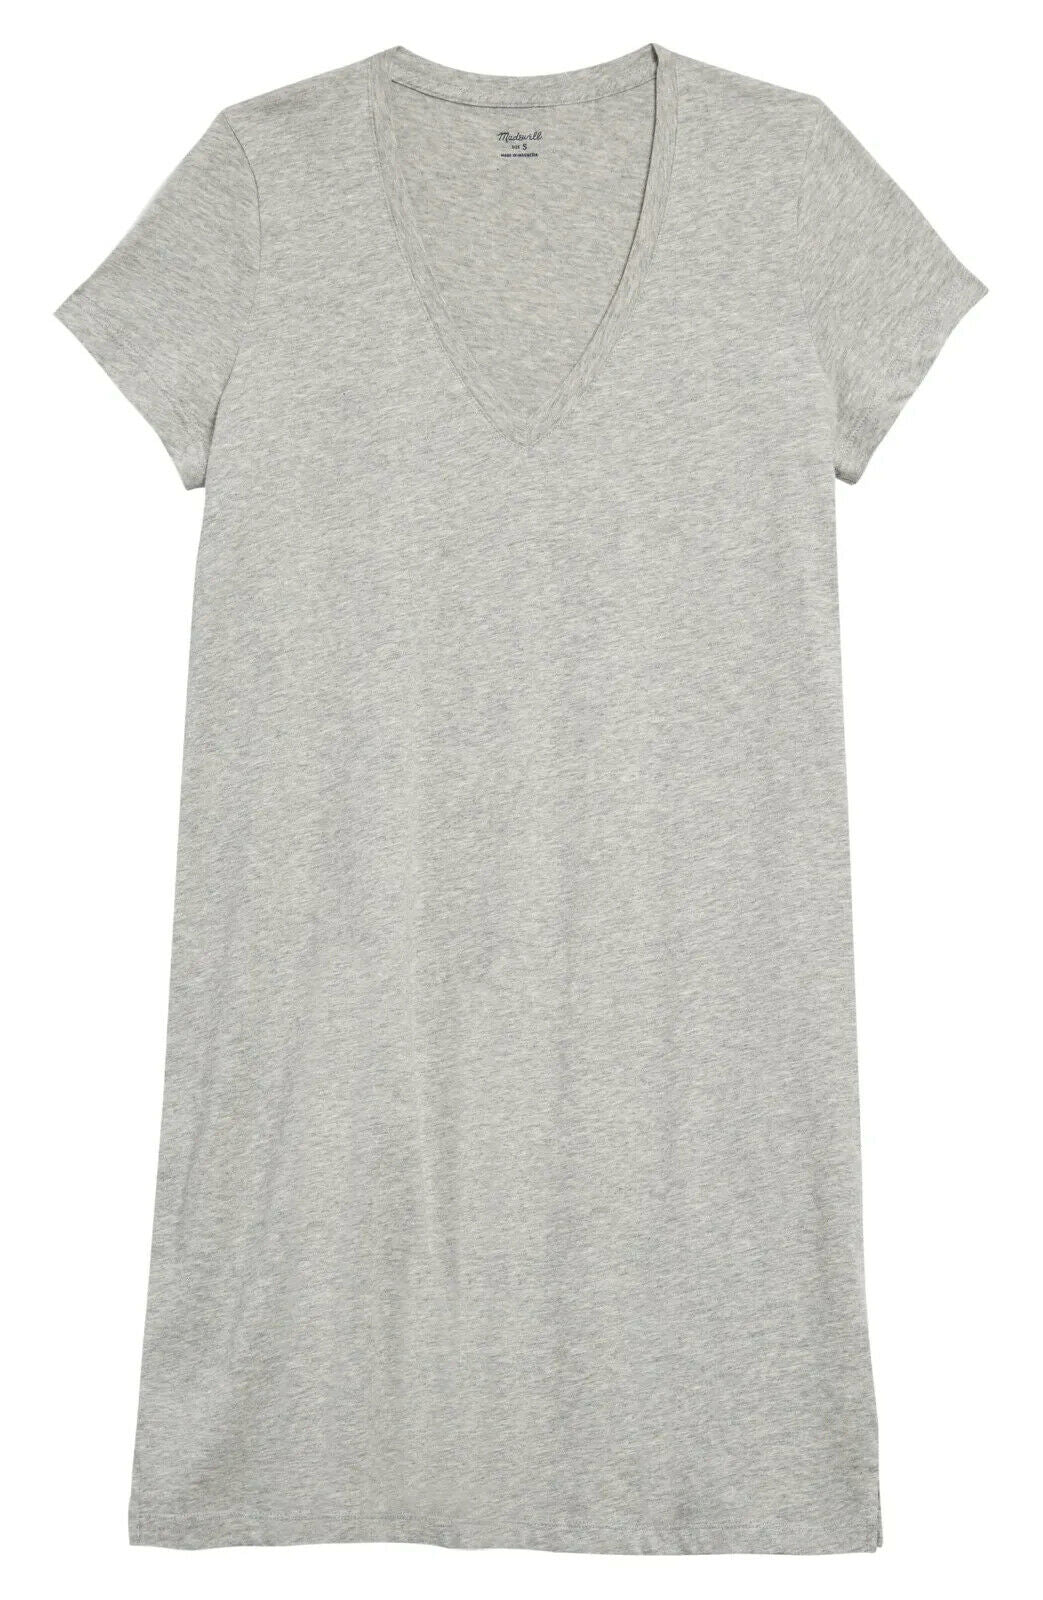 Madewell Gray Northside Vintage V-Neck T-Shirt Dress, Size S